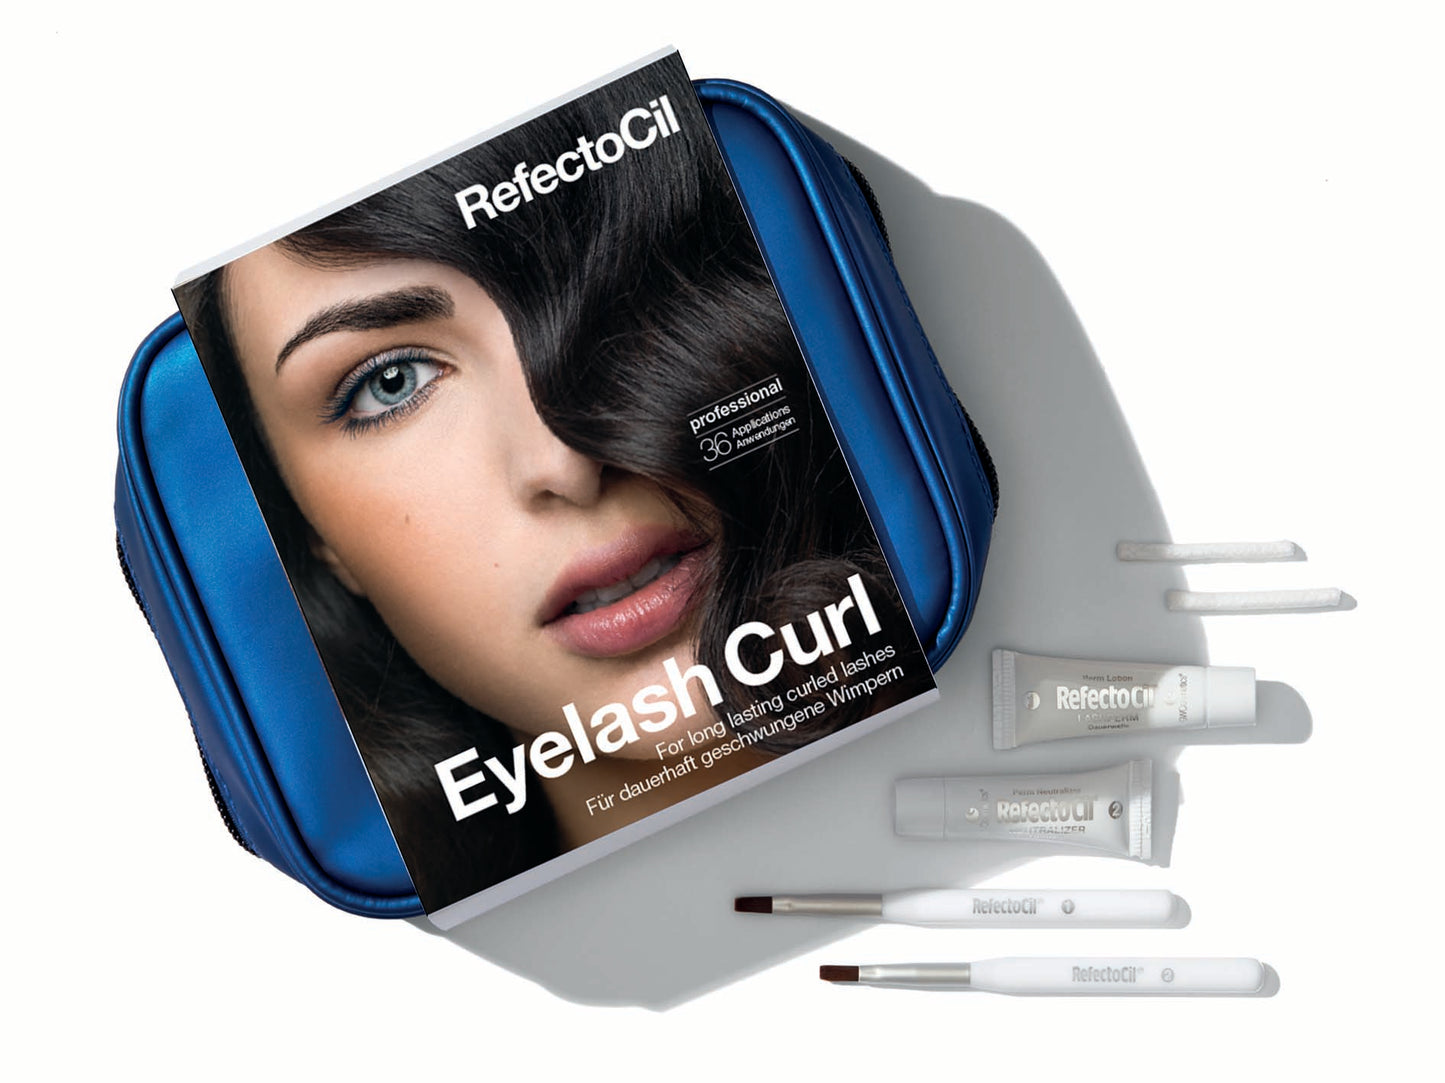 Refectocil Eyelash Curl 36 Applications